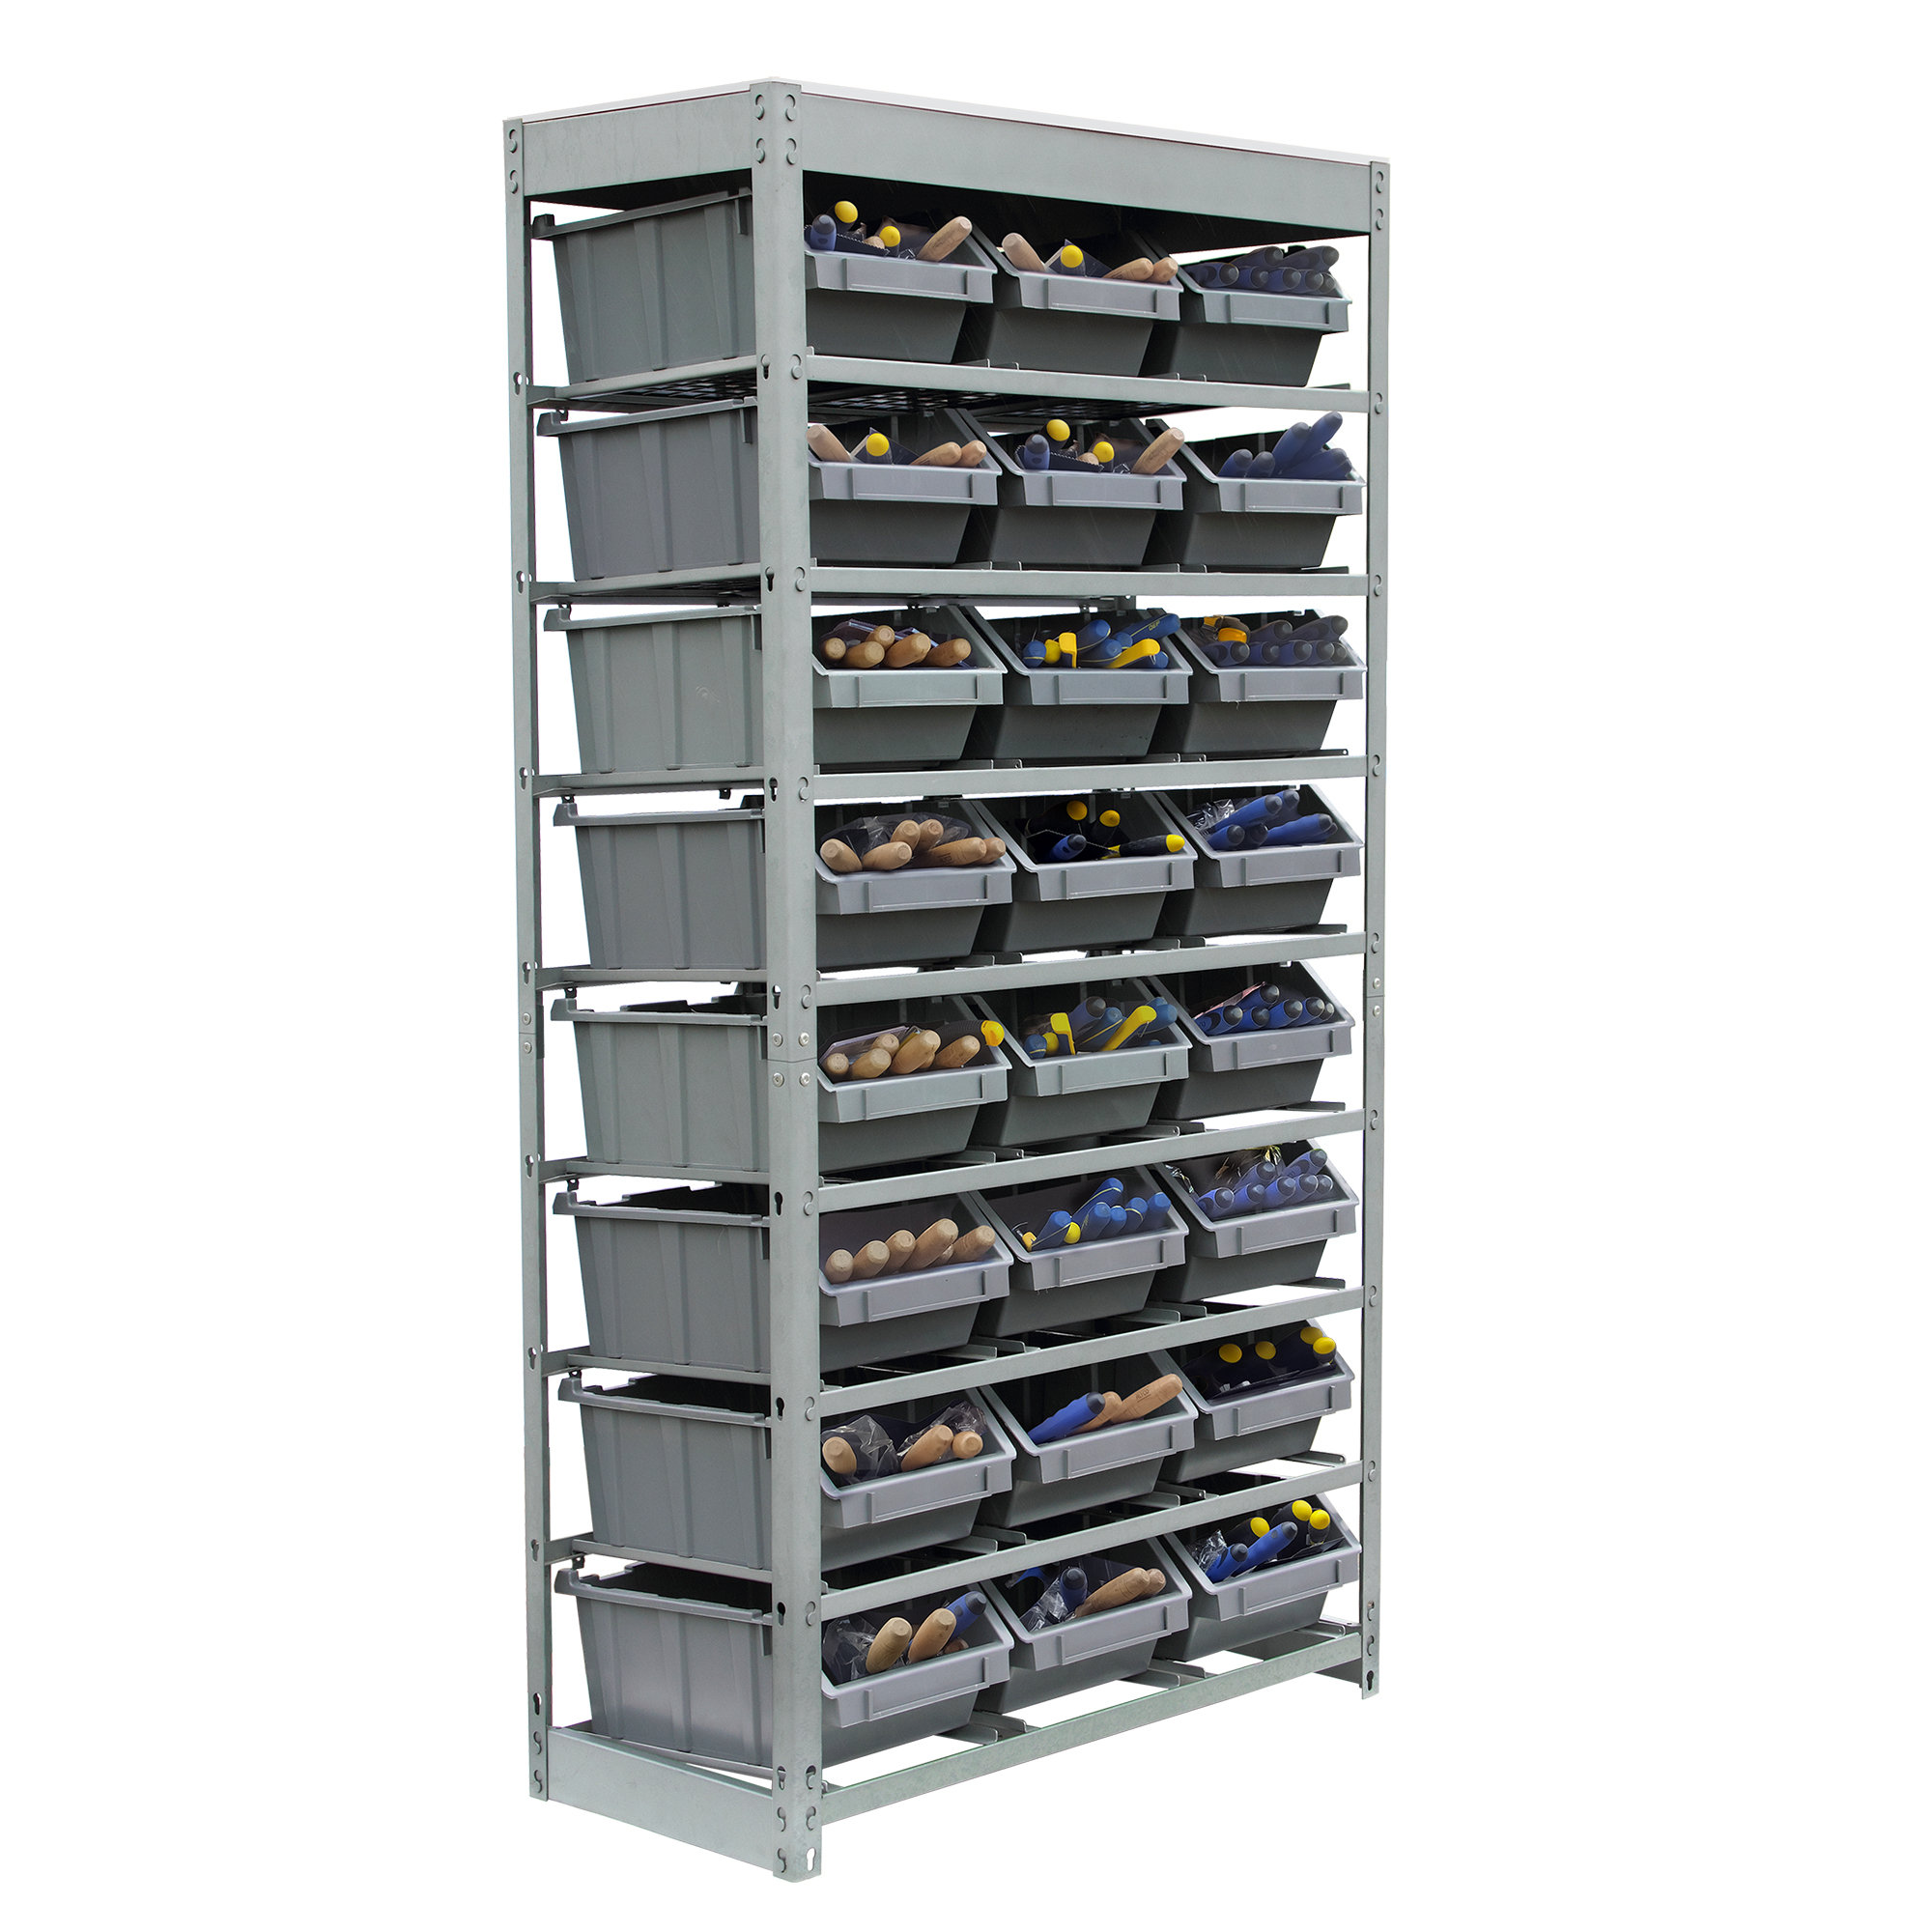 Jymon 33 W x 15 D x 50 H Garage Storage Bin Rack System Heavy Duty 6 Tiers 22 Bins Shelving Units Rebrilliant